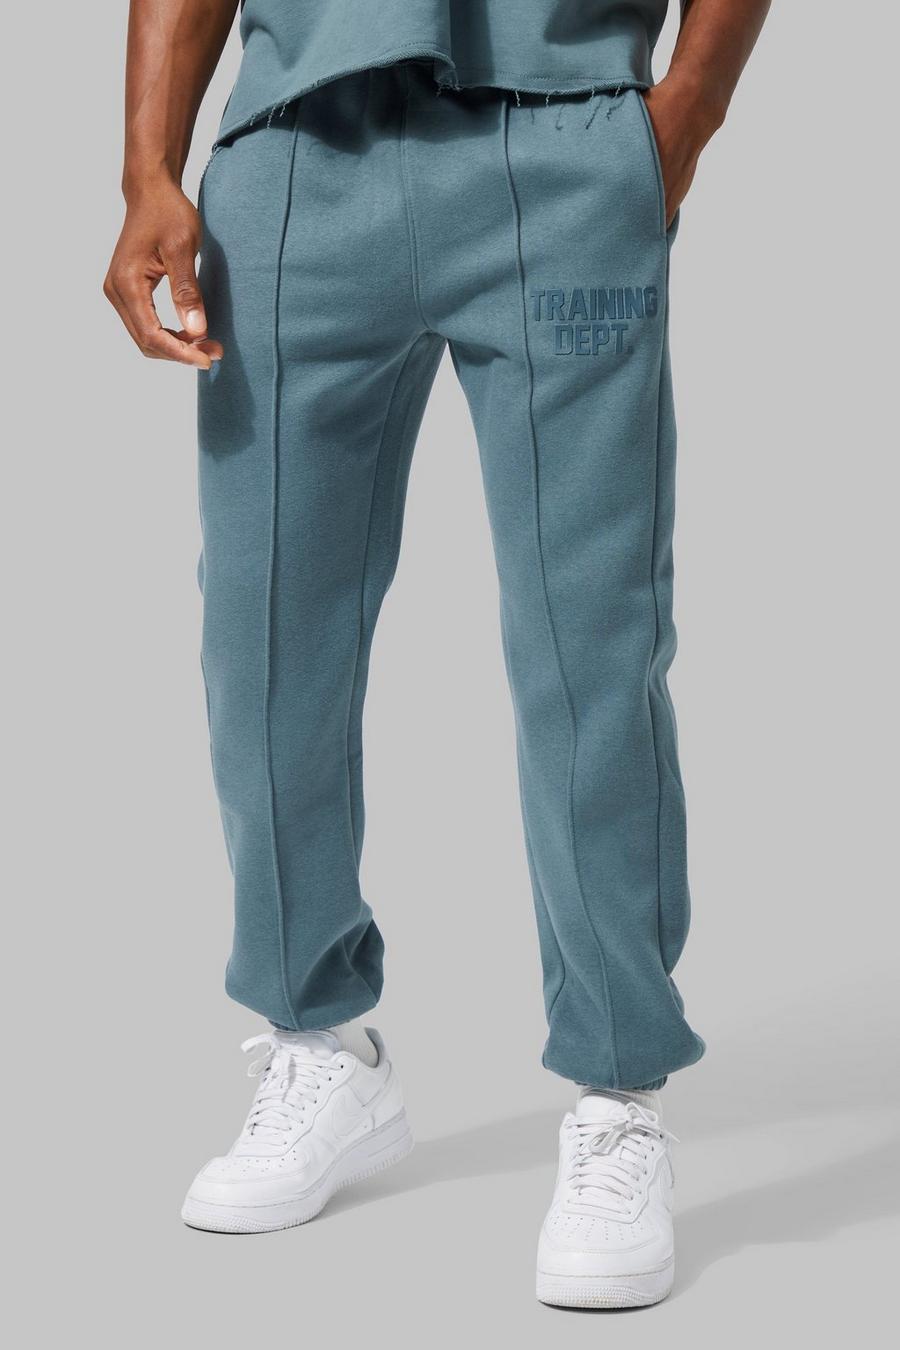 Pantalón deportivo Active ajustado, Slate blue